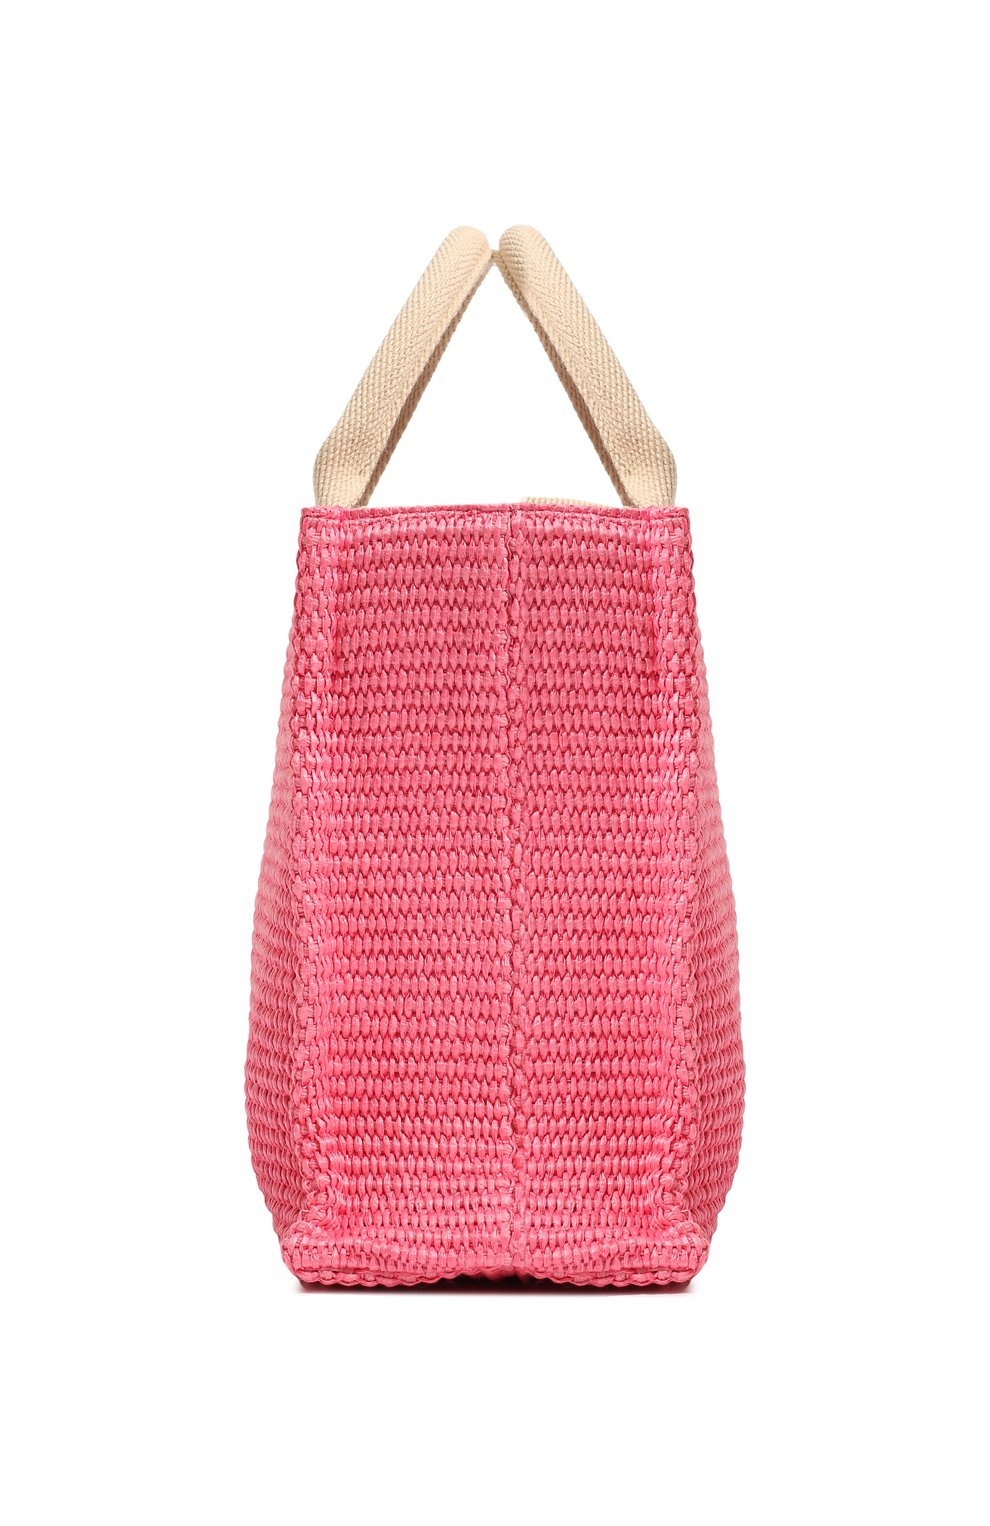 Женский сумка-тоут basket small MARNI розового цвета, арт. SHMP0077U0/P3860 | Фото 3 (Сумки-технические: Сумки-шопперы; Материал сплава: Проставлено; Материал: Текстиль; Драгоценные камни: Проставлено; Размер: small)